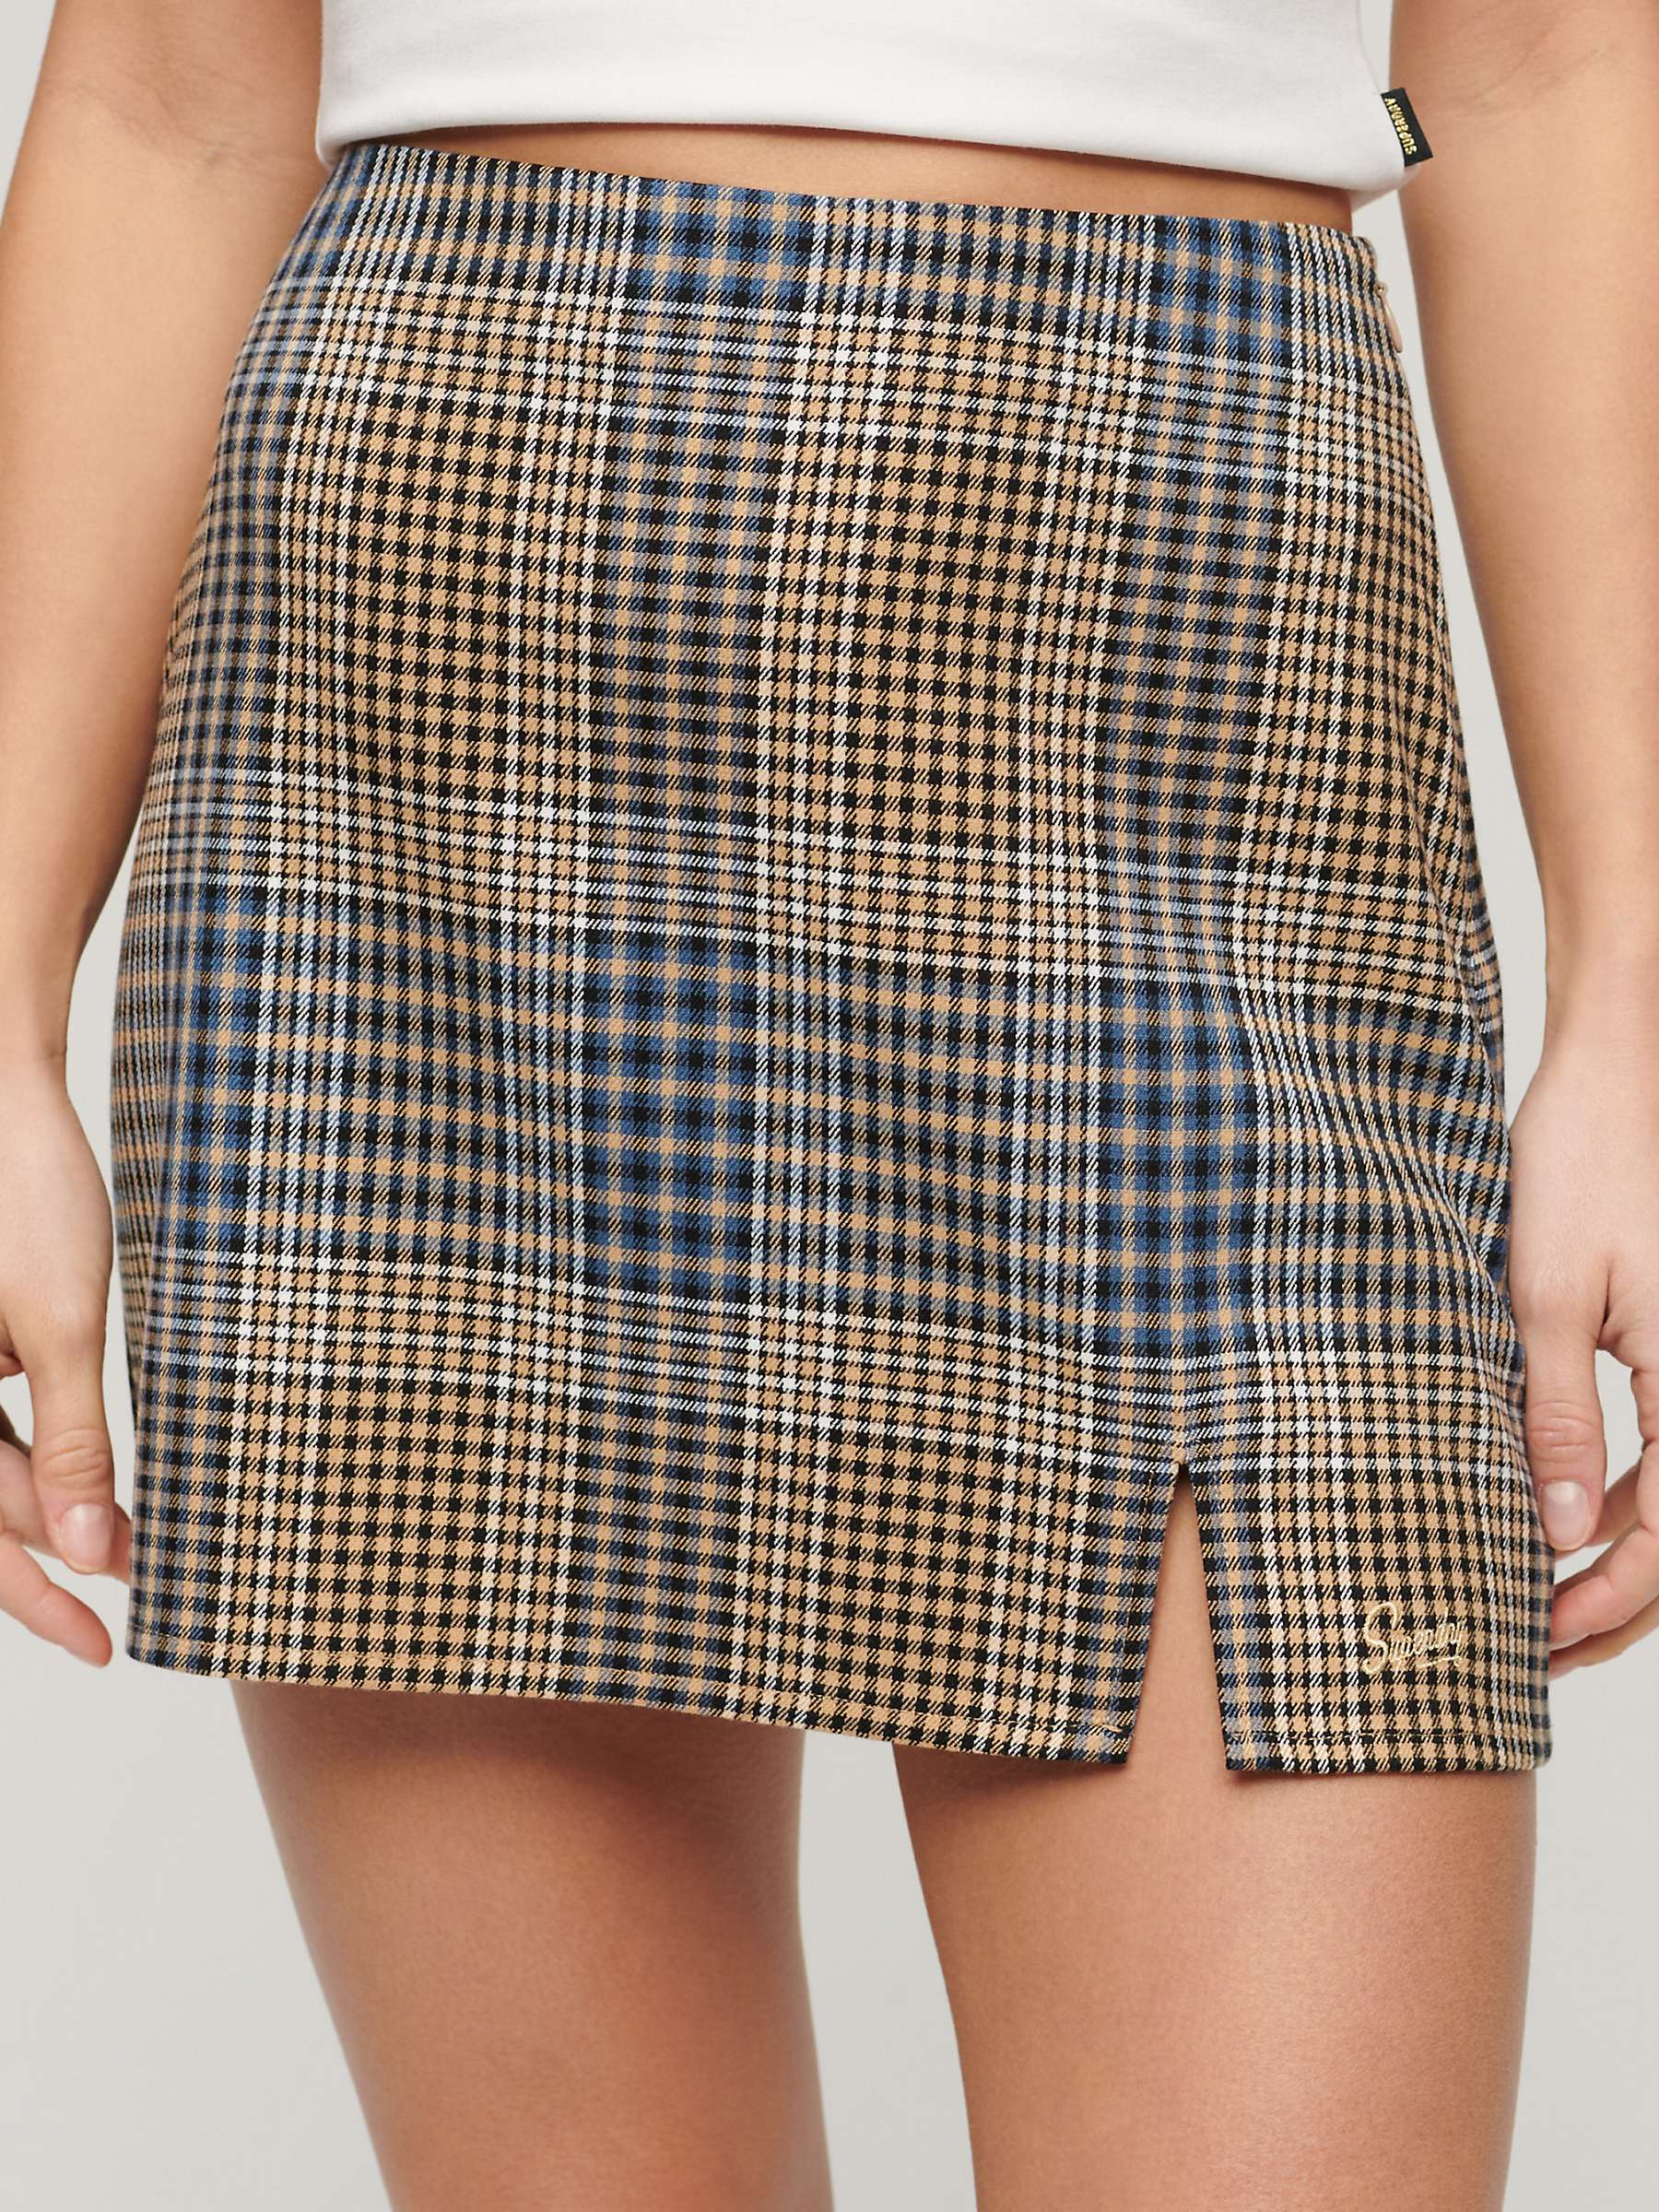 Buy Superdry Double Check Mini Skirt, Beige/Multi Online at johnlewis.com